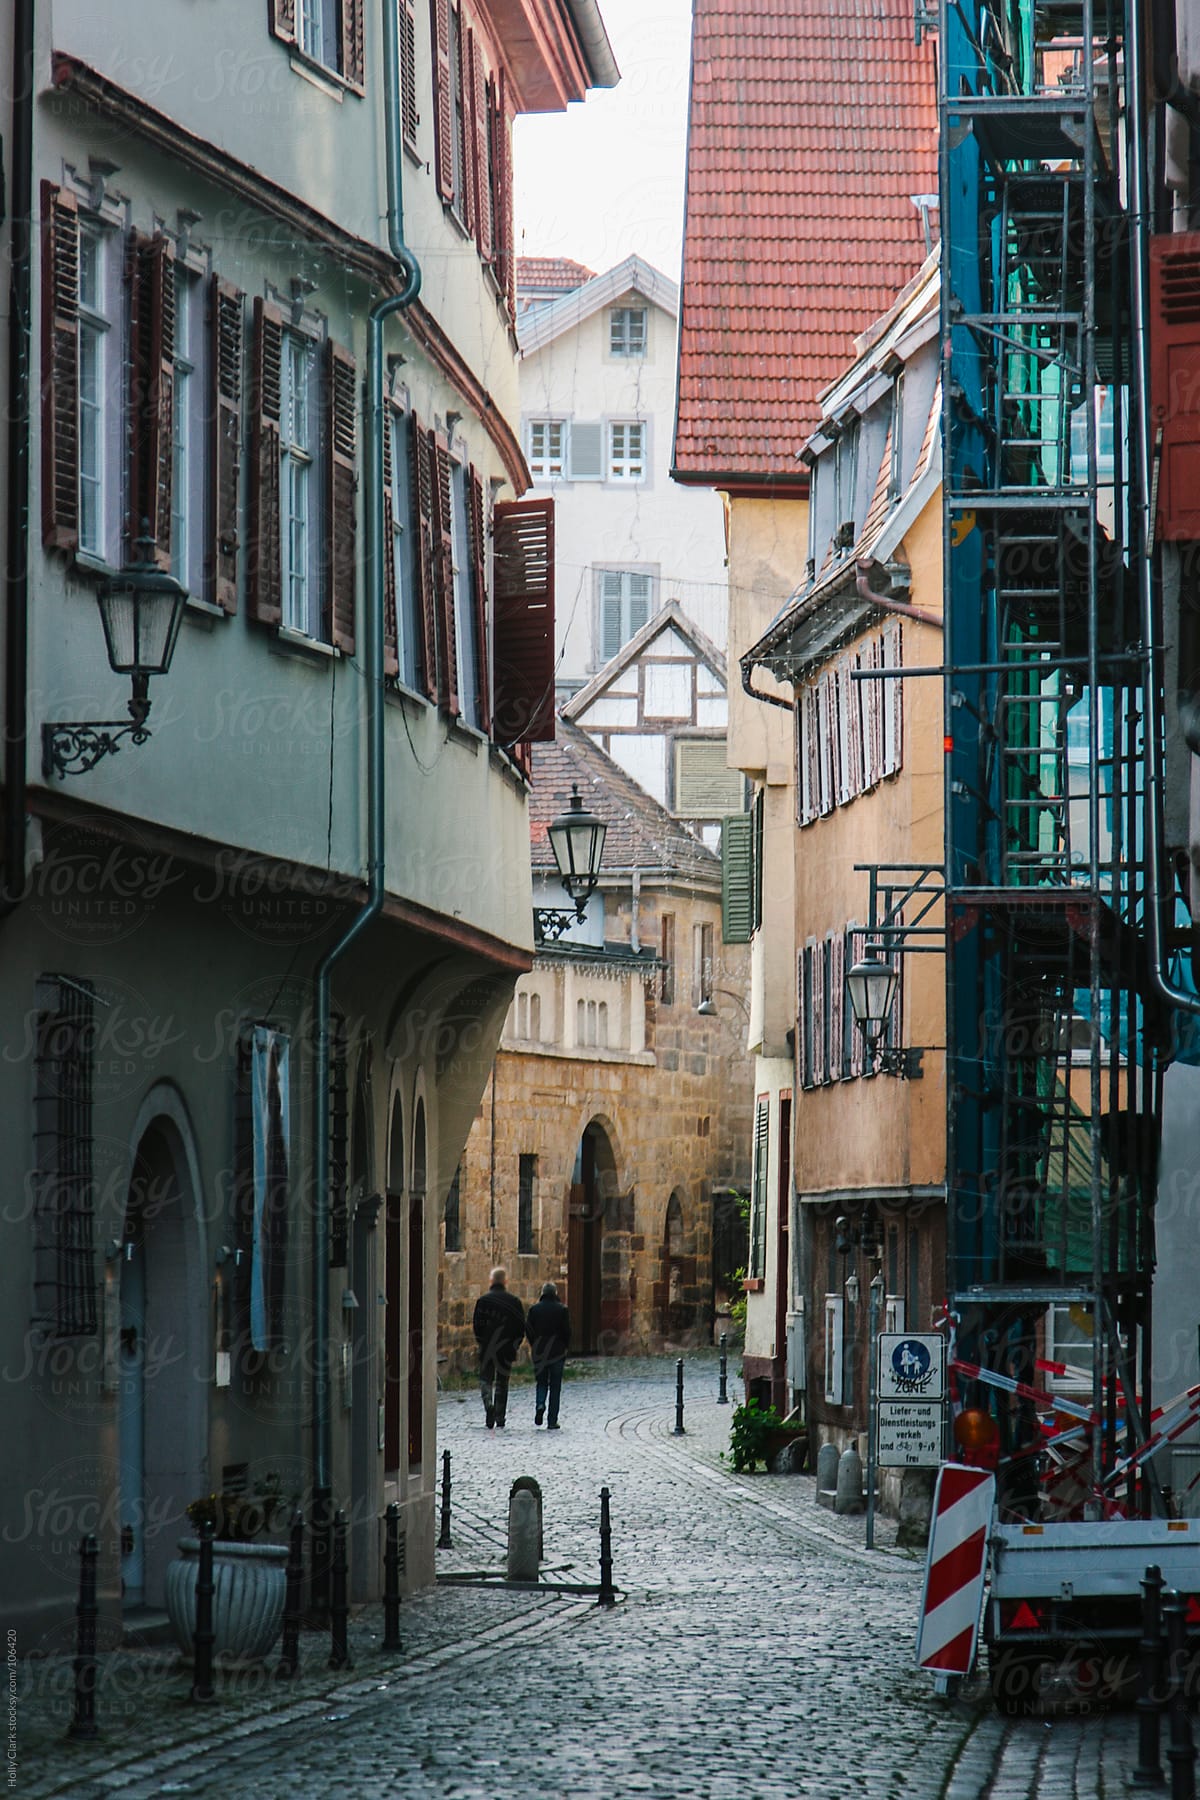 Two figures walk down narrow cobblestone German street